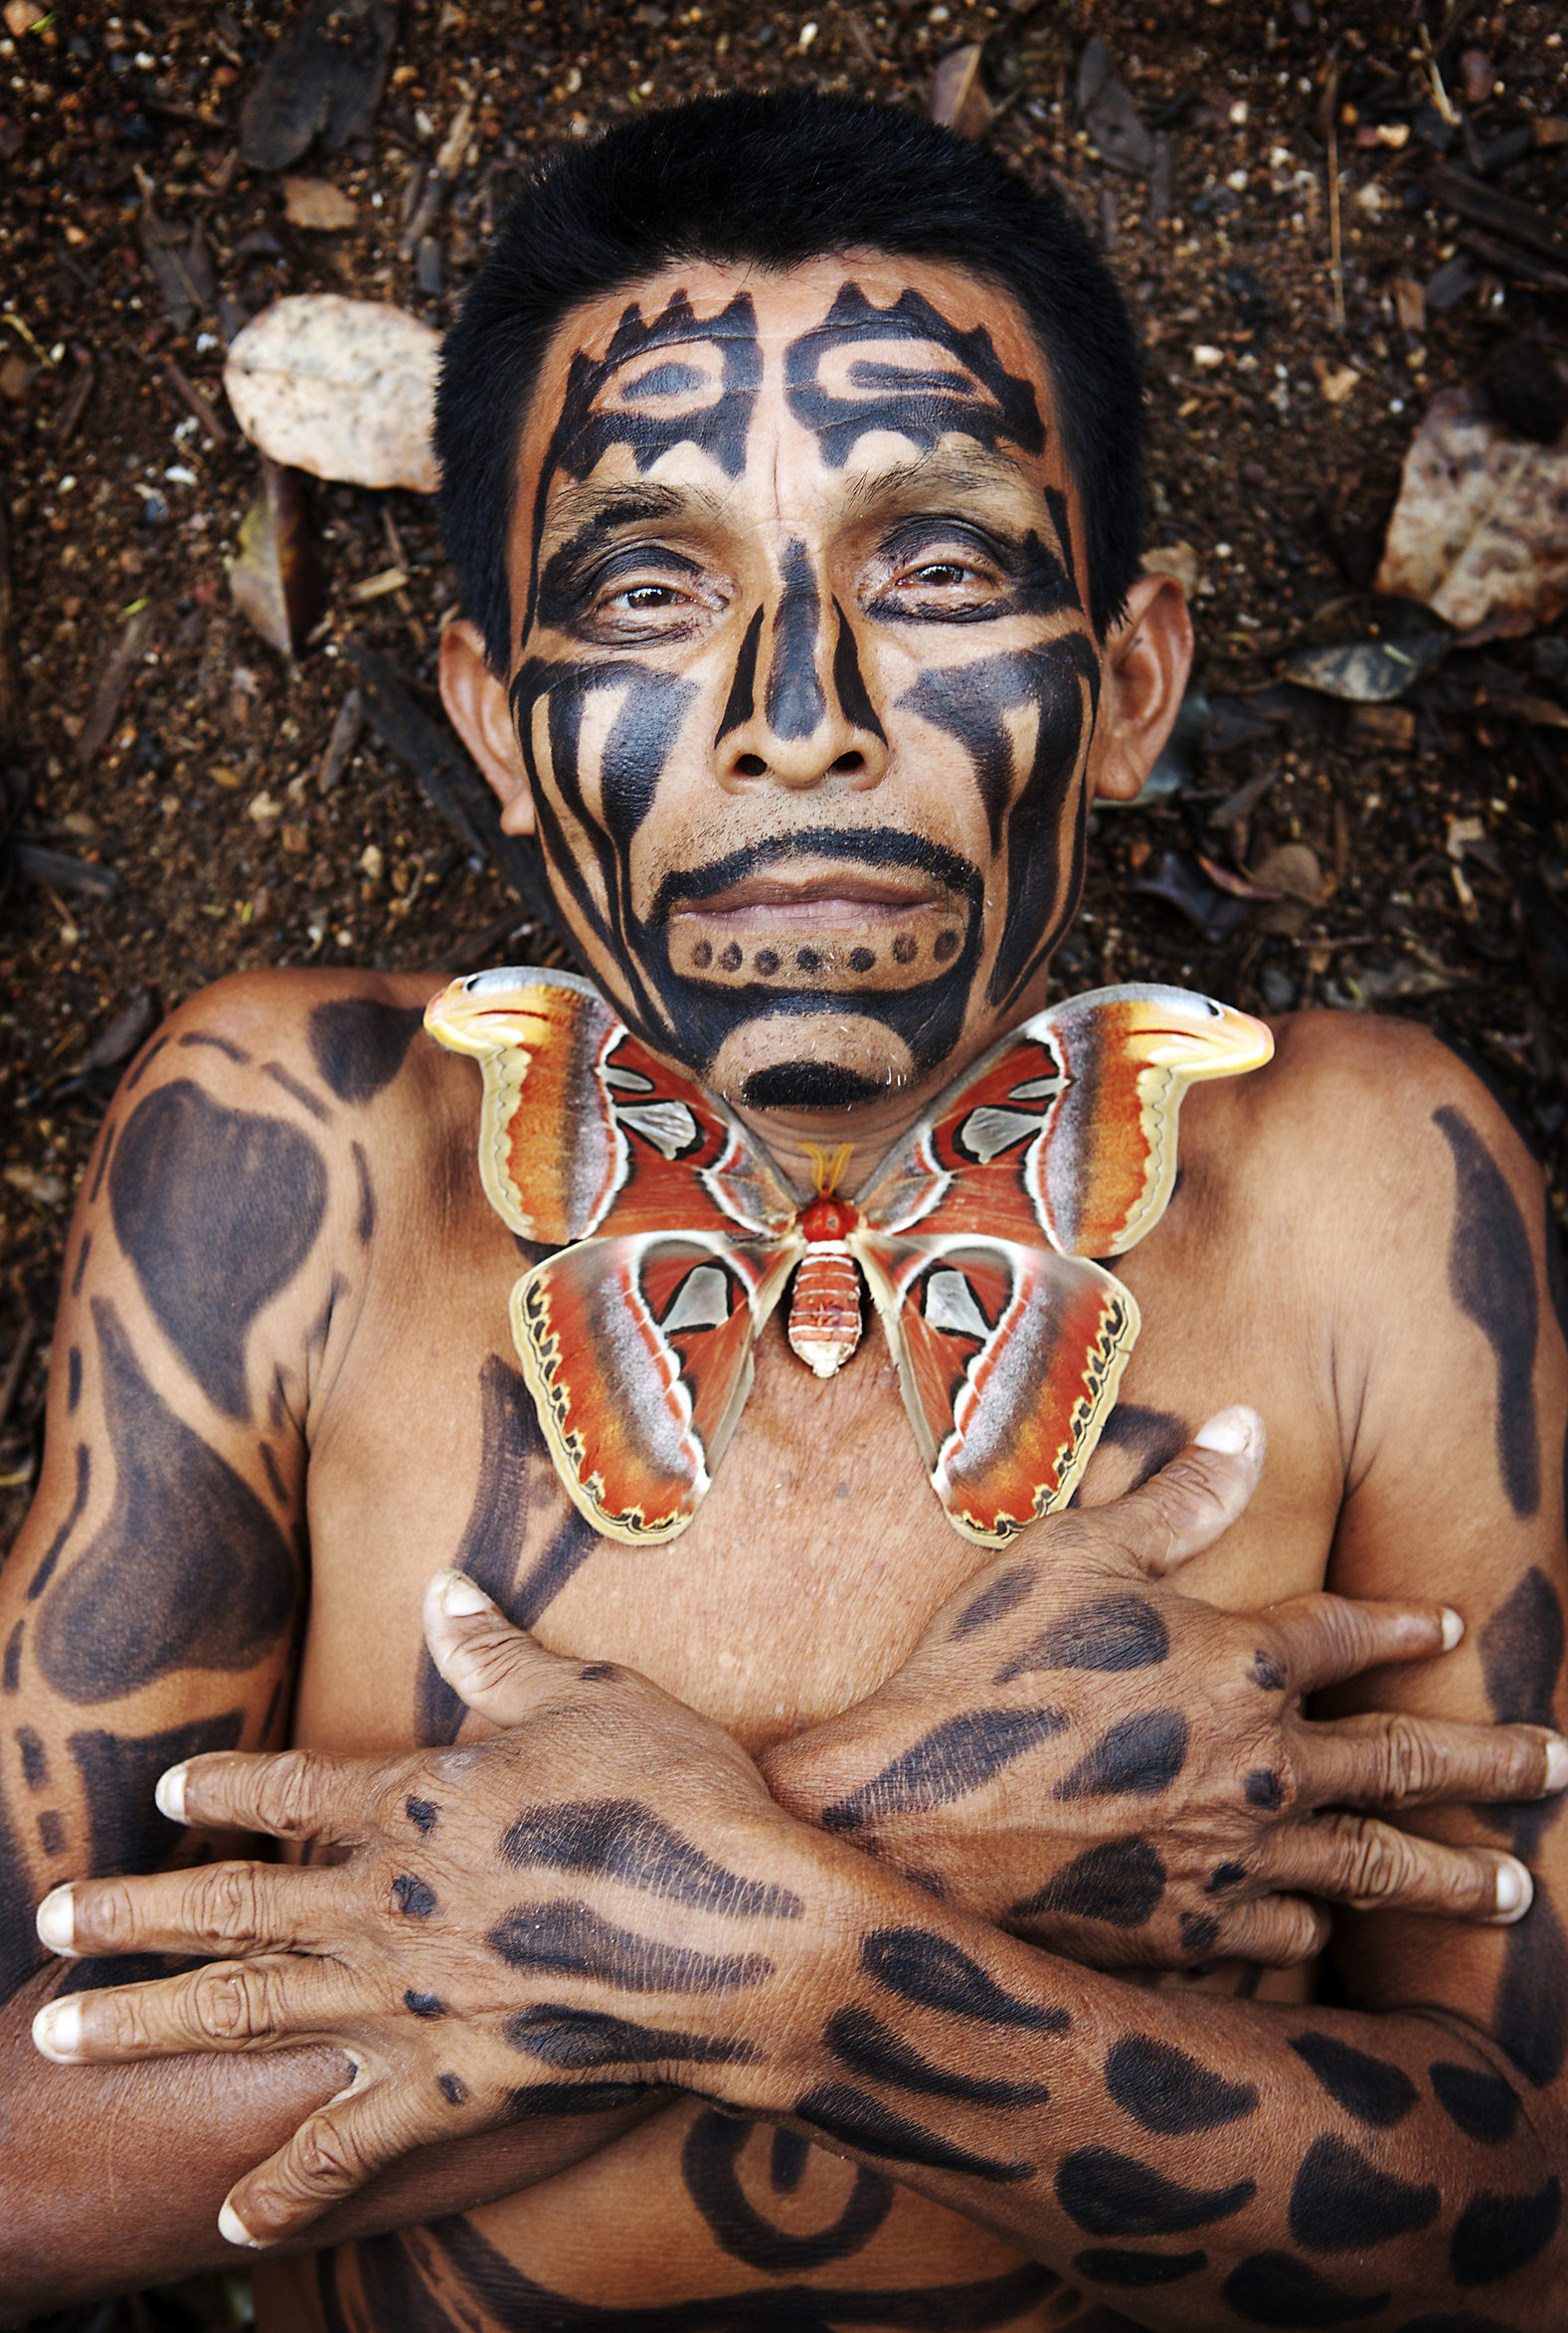 Hispanic man with painted body laying in dirt, Lago Izabal, Guatemala